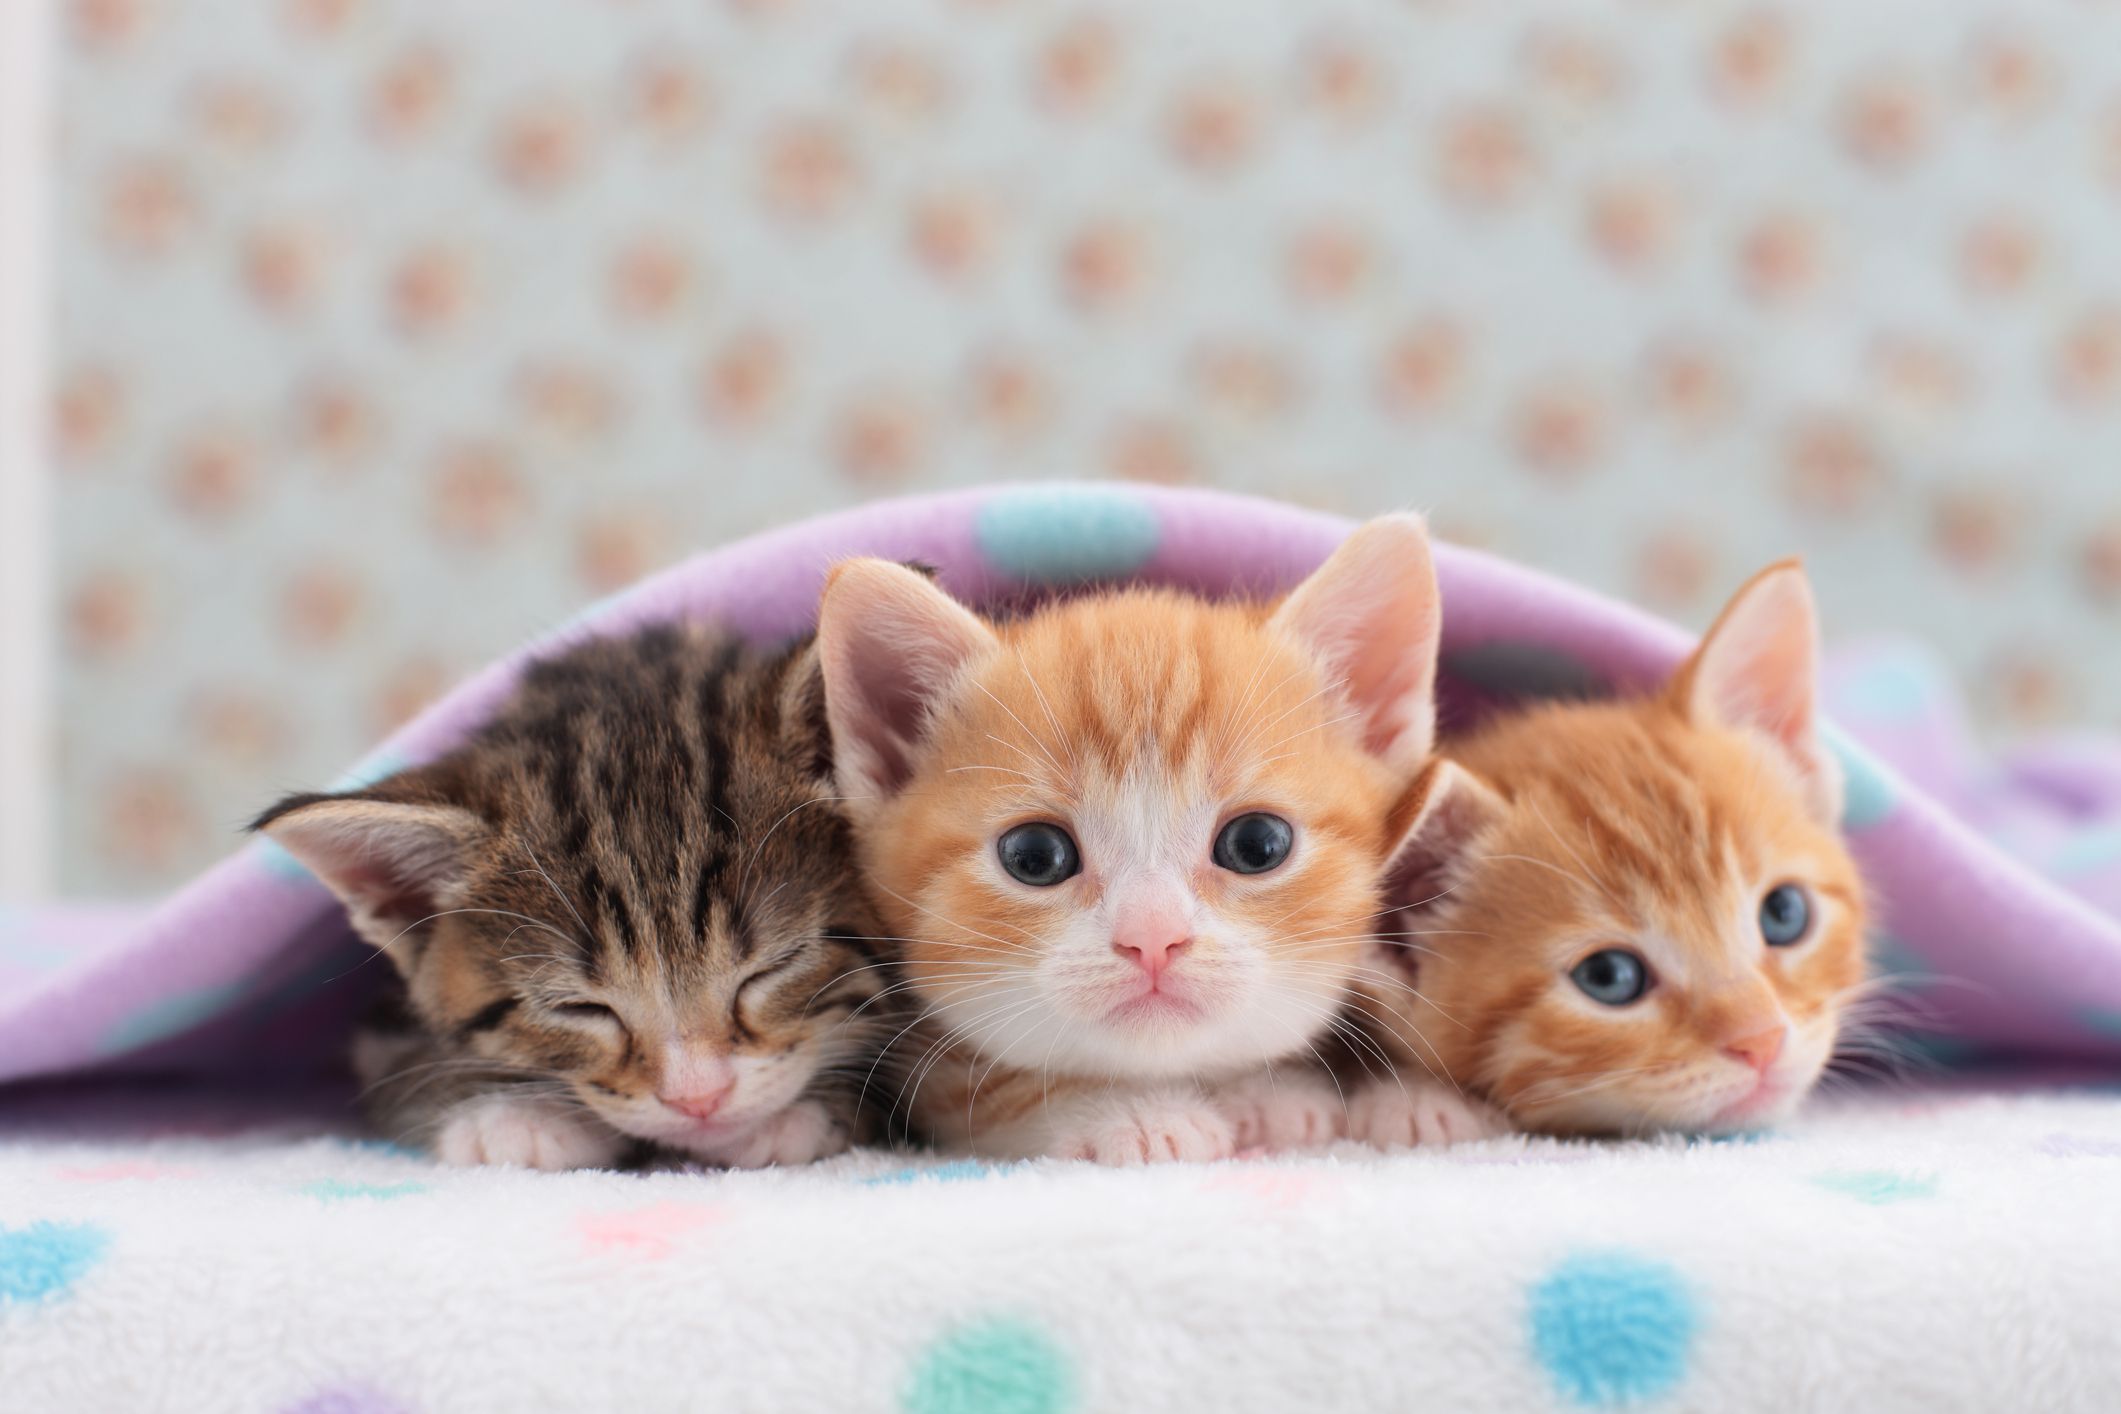 Kittens - Cats and Kittens Club Photo (41536656) - Fanpop